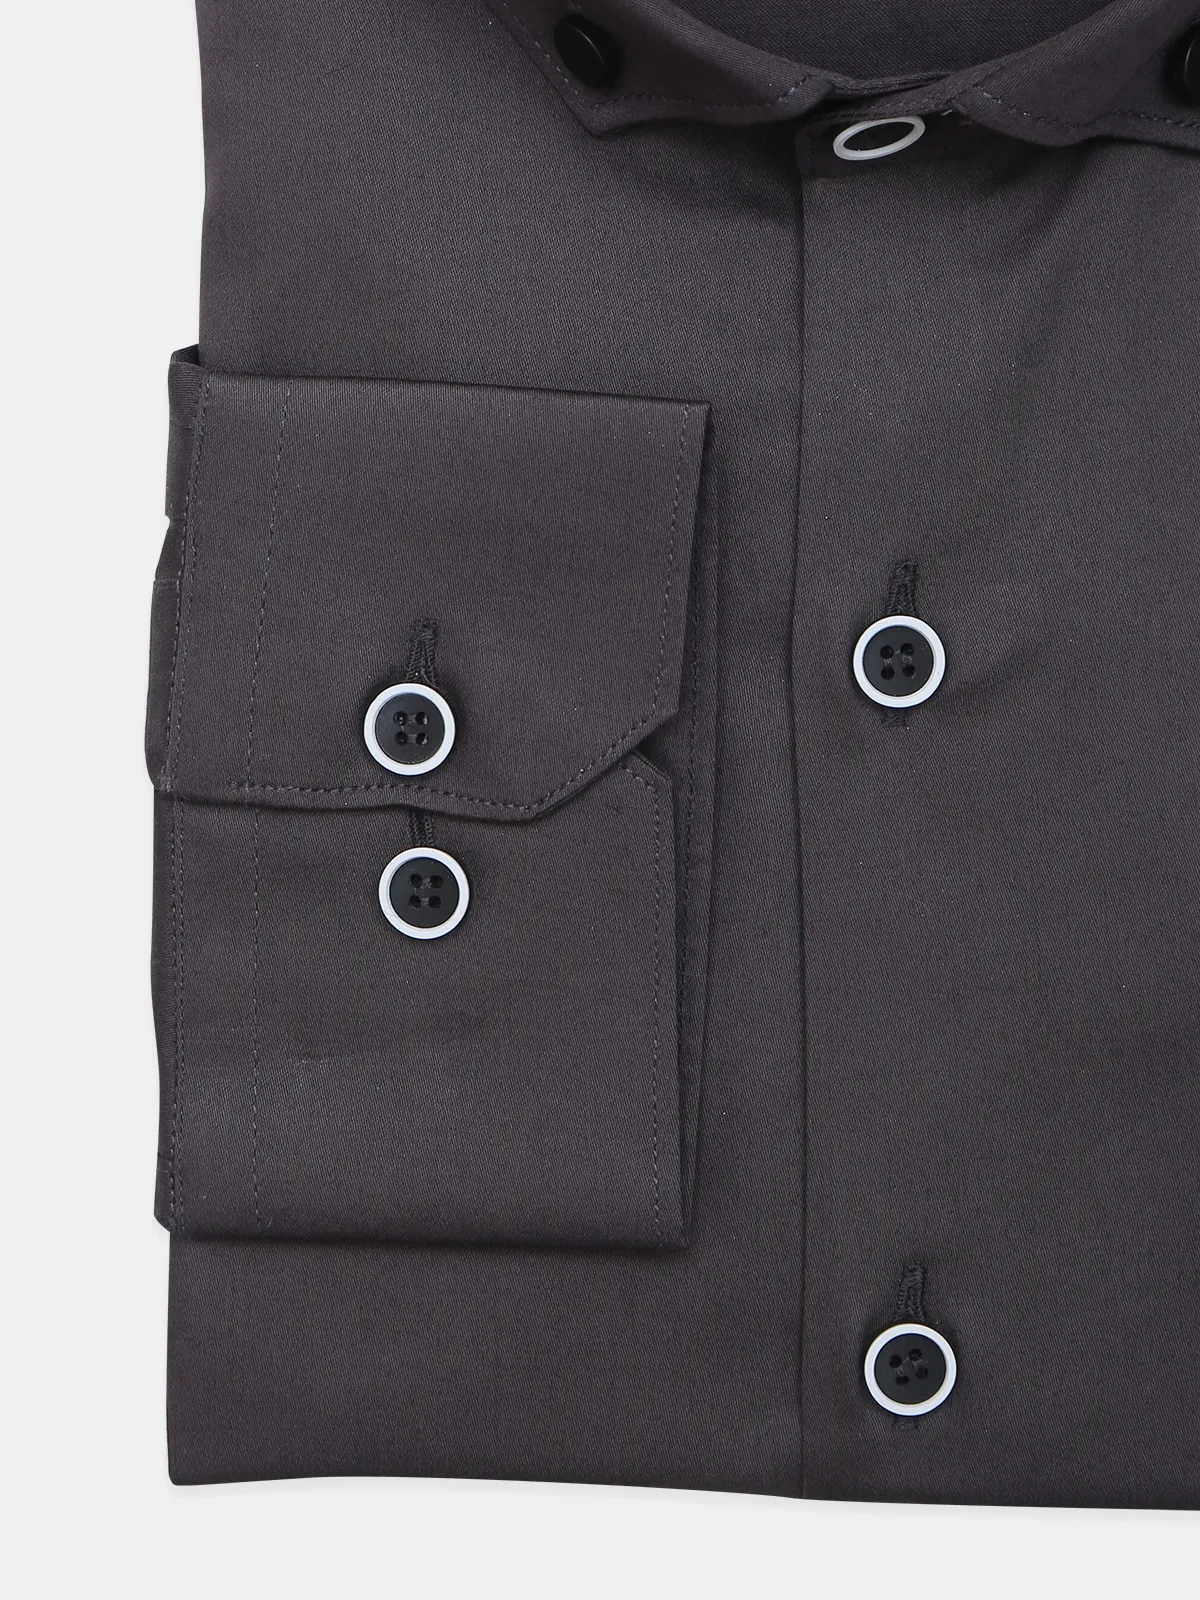 Iparty dark grey color cotton casual shirt